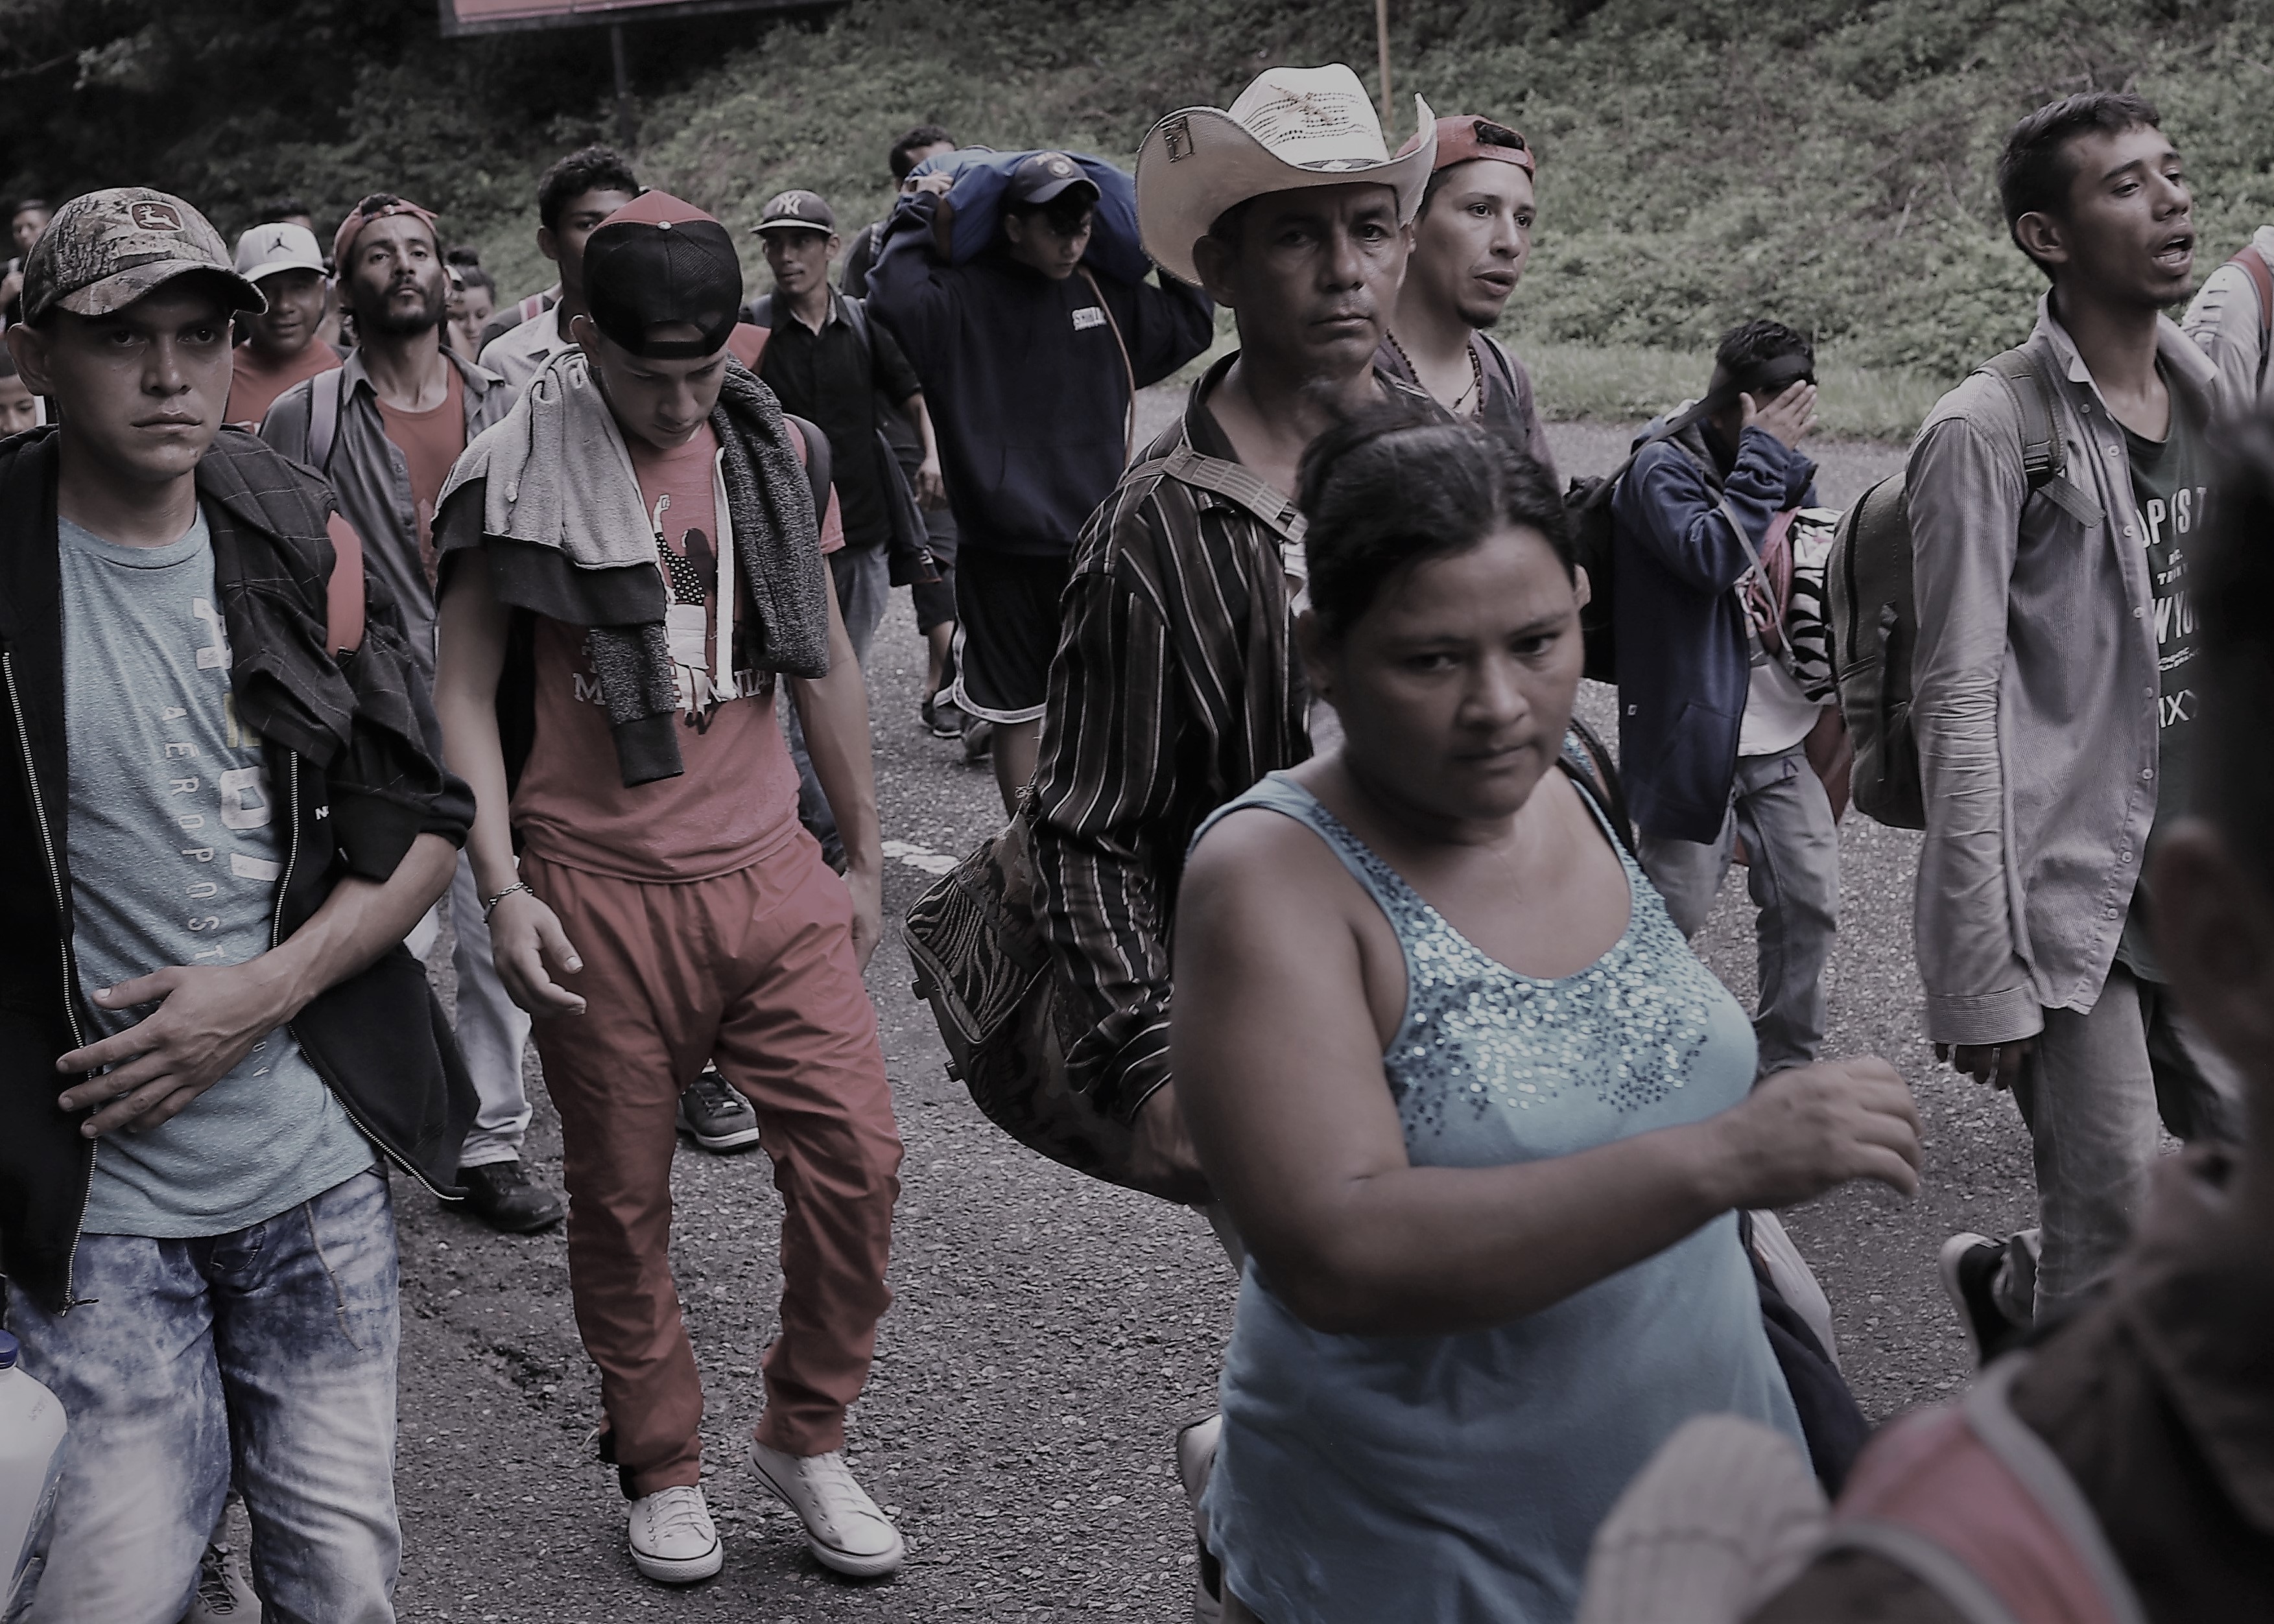 Acusa INM a Dirigente de Caravana, Arriesga a Migrantes